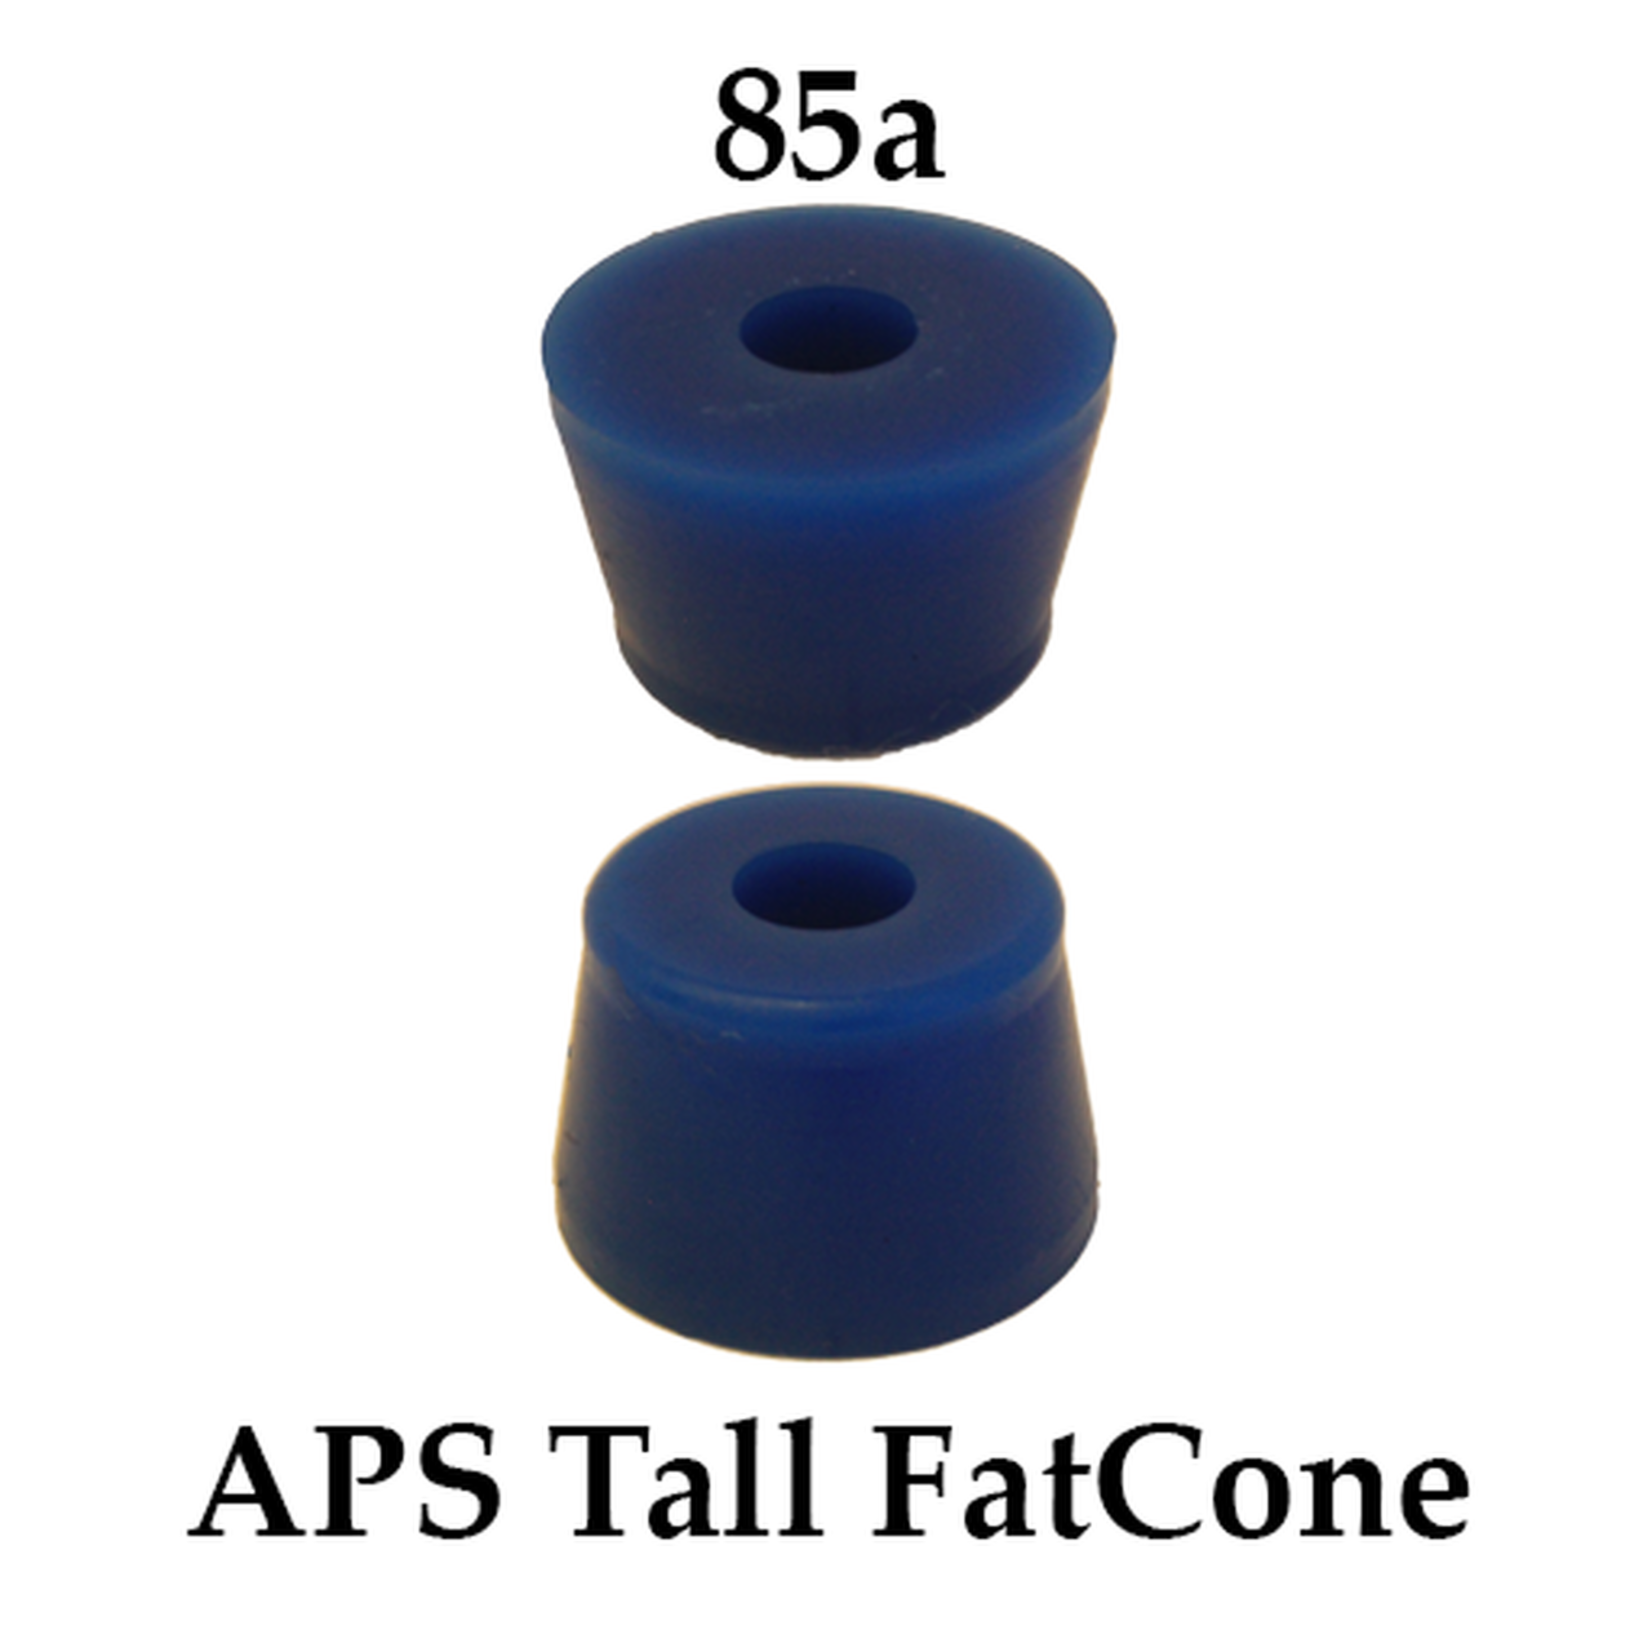 Riptide Sports APS Tall FatCone